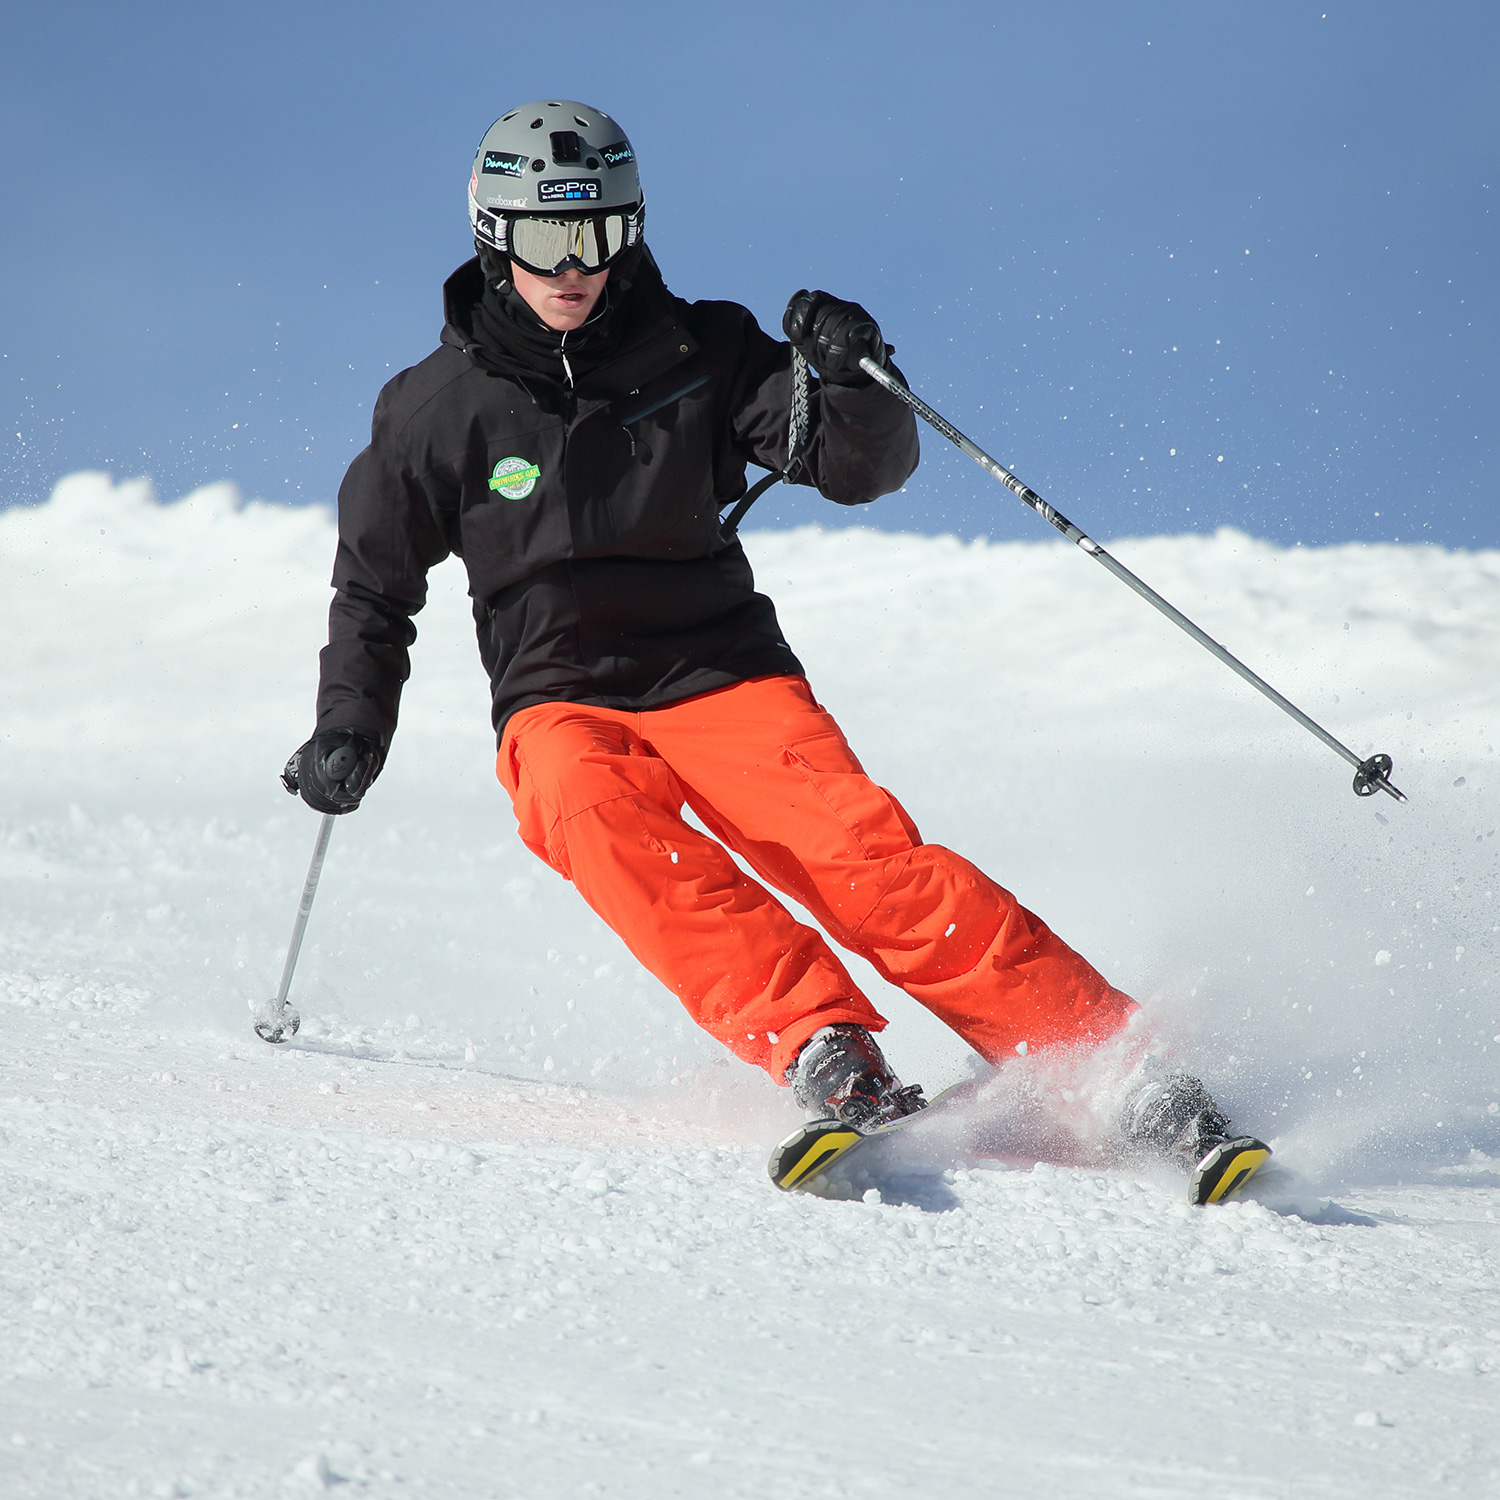 Snoworks GAP ski instructor trainee